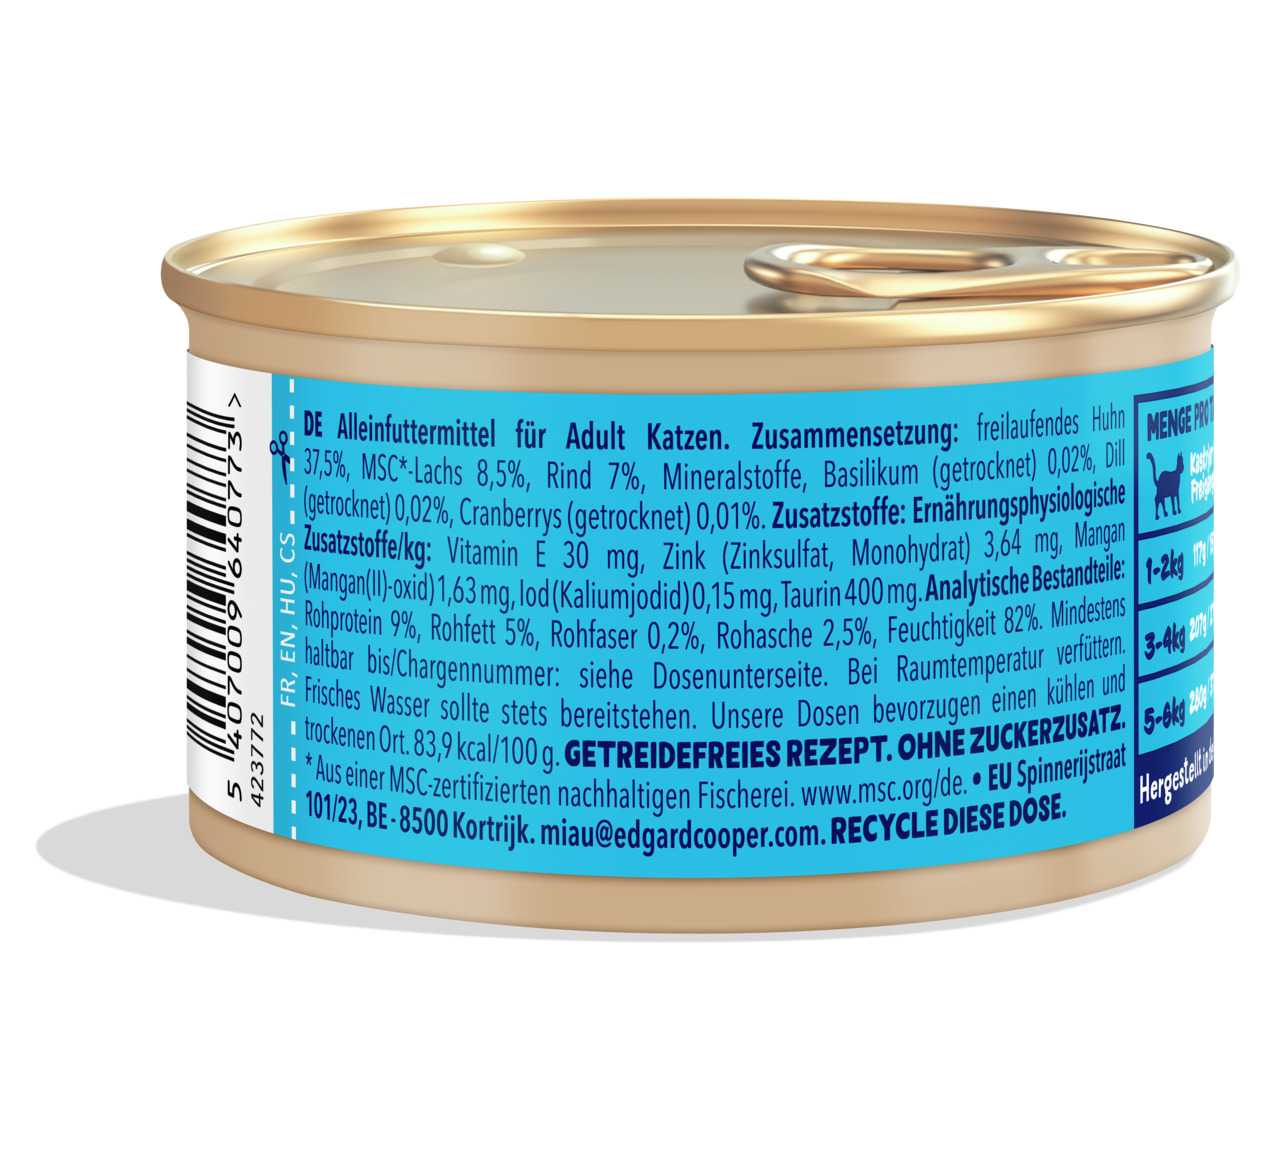 Edgard & Cooper Adult Lachs & Huhn Stückchen in Soße Katzen Nassfutter 85 g